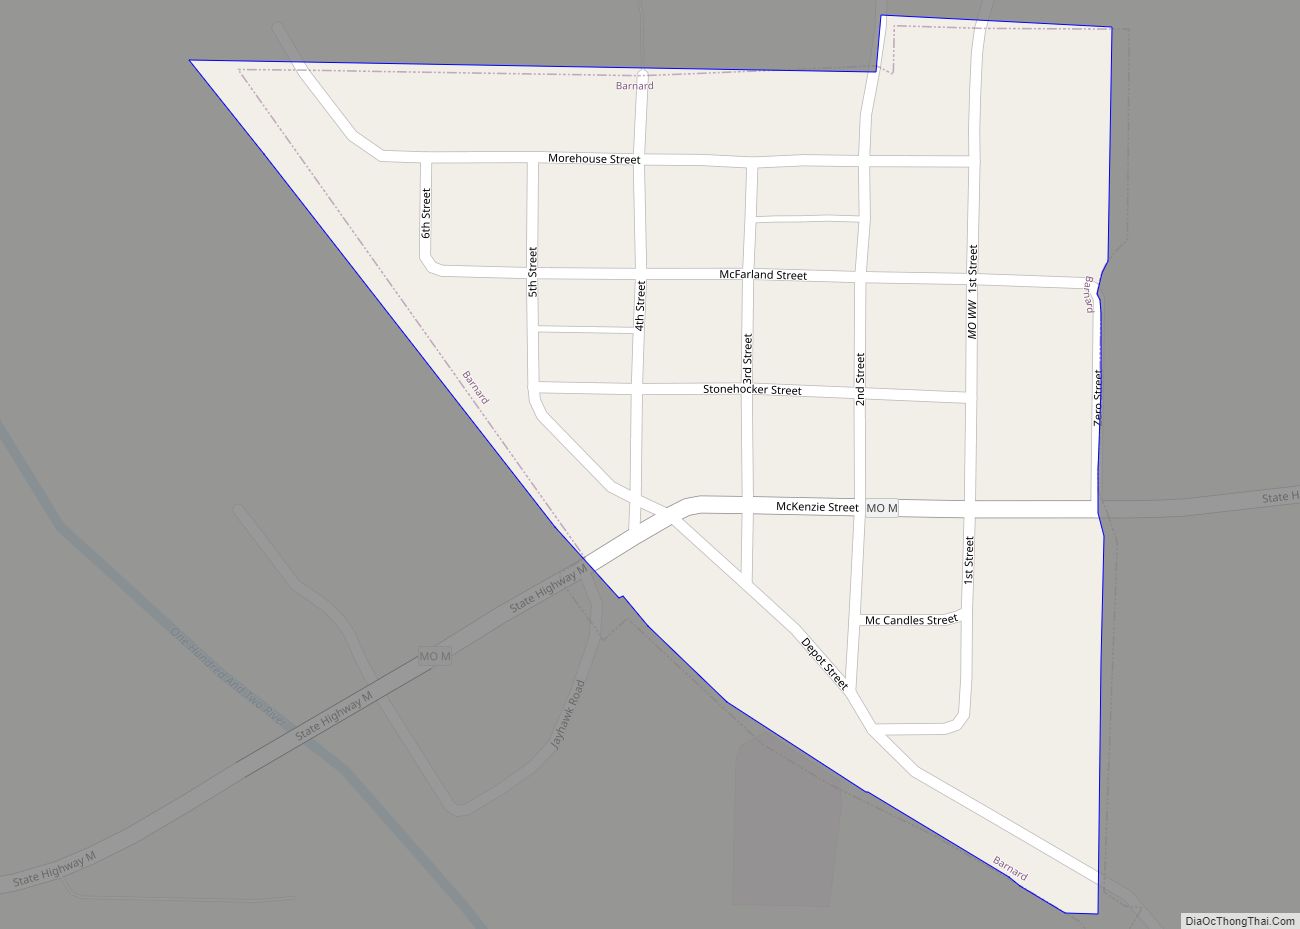 Map of Barnard city, Missouri